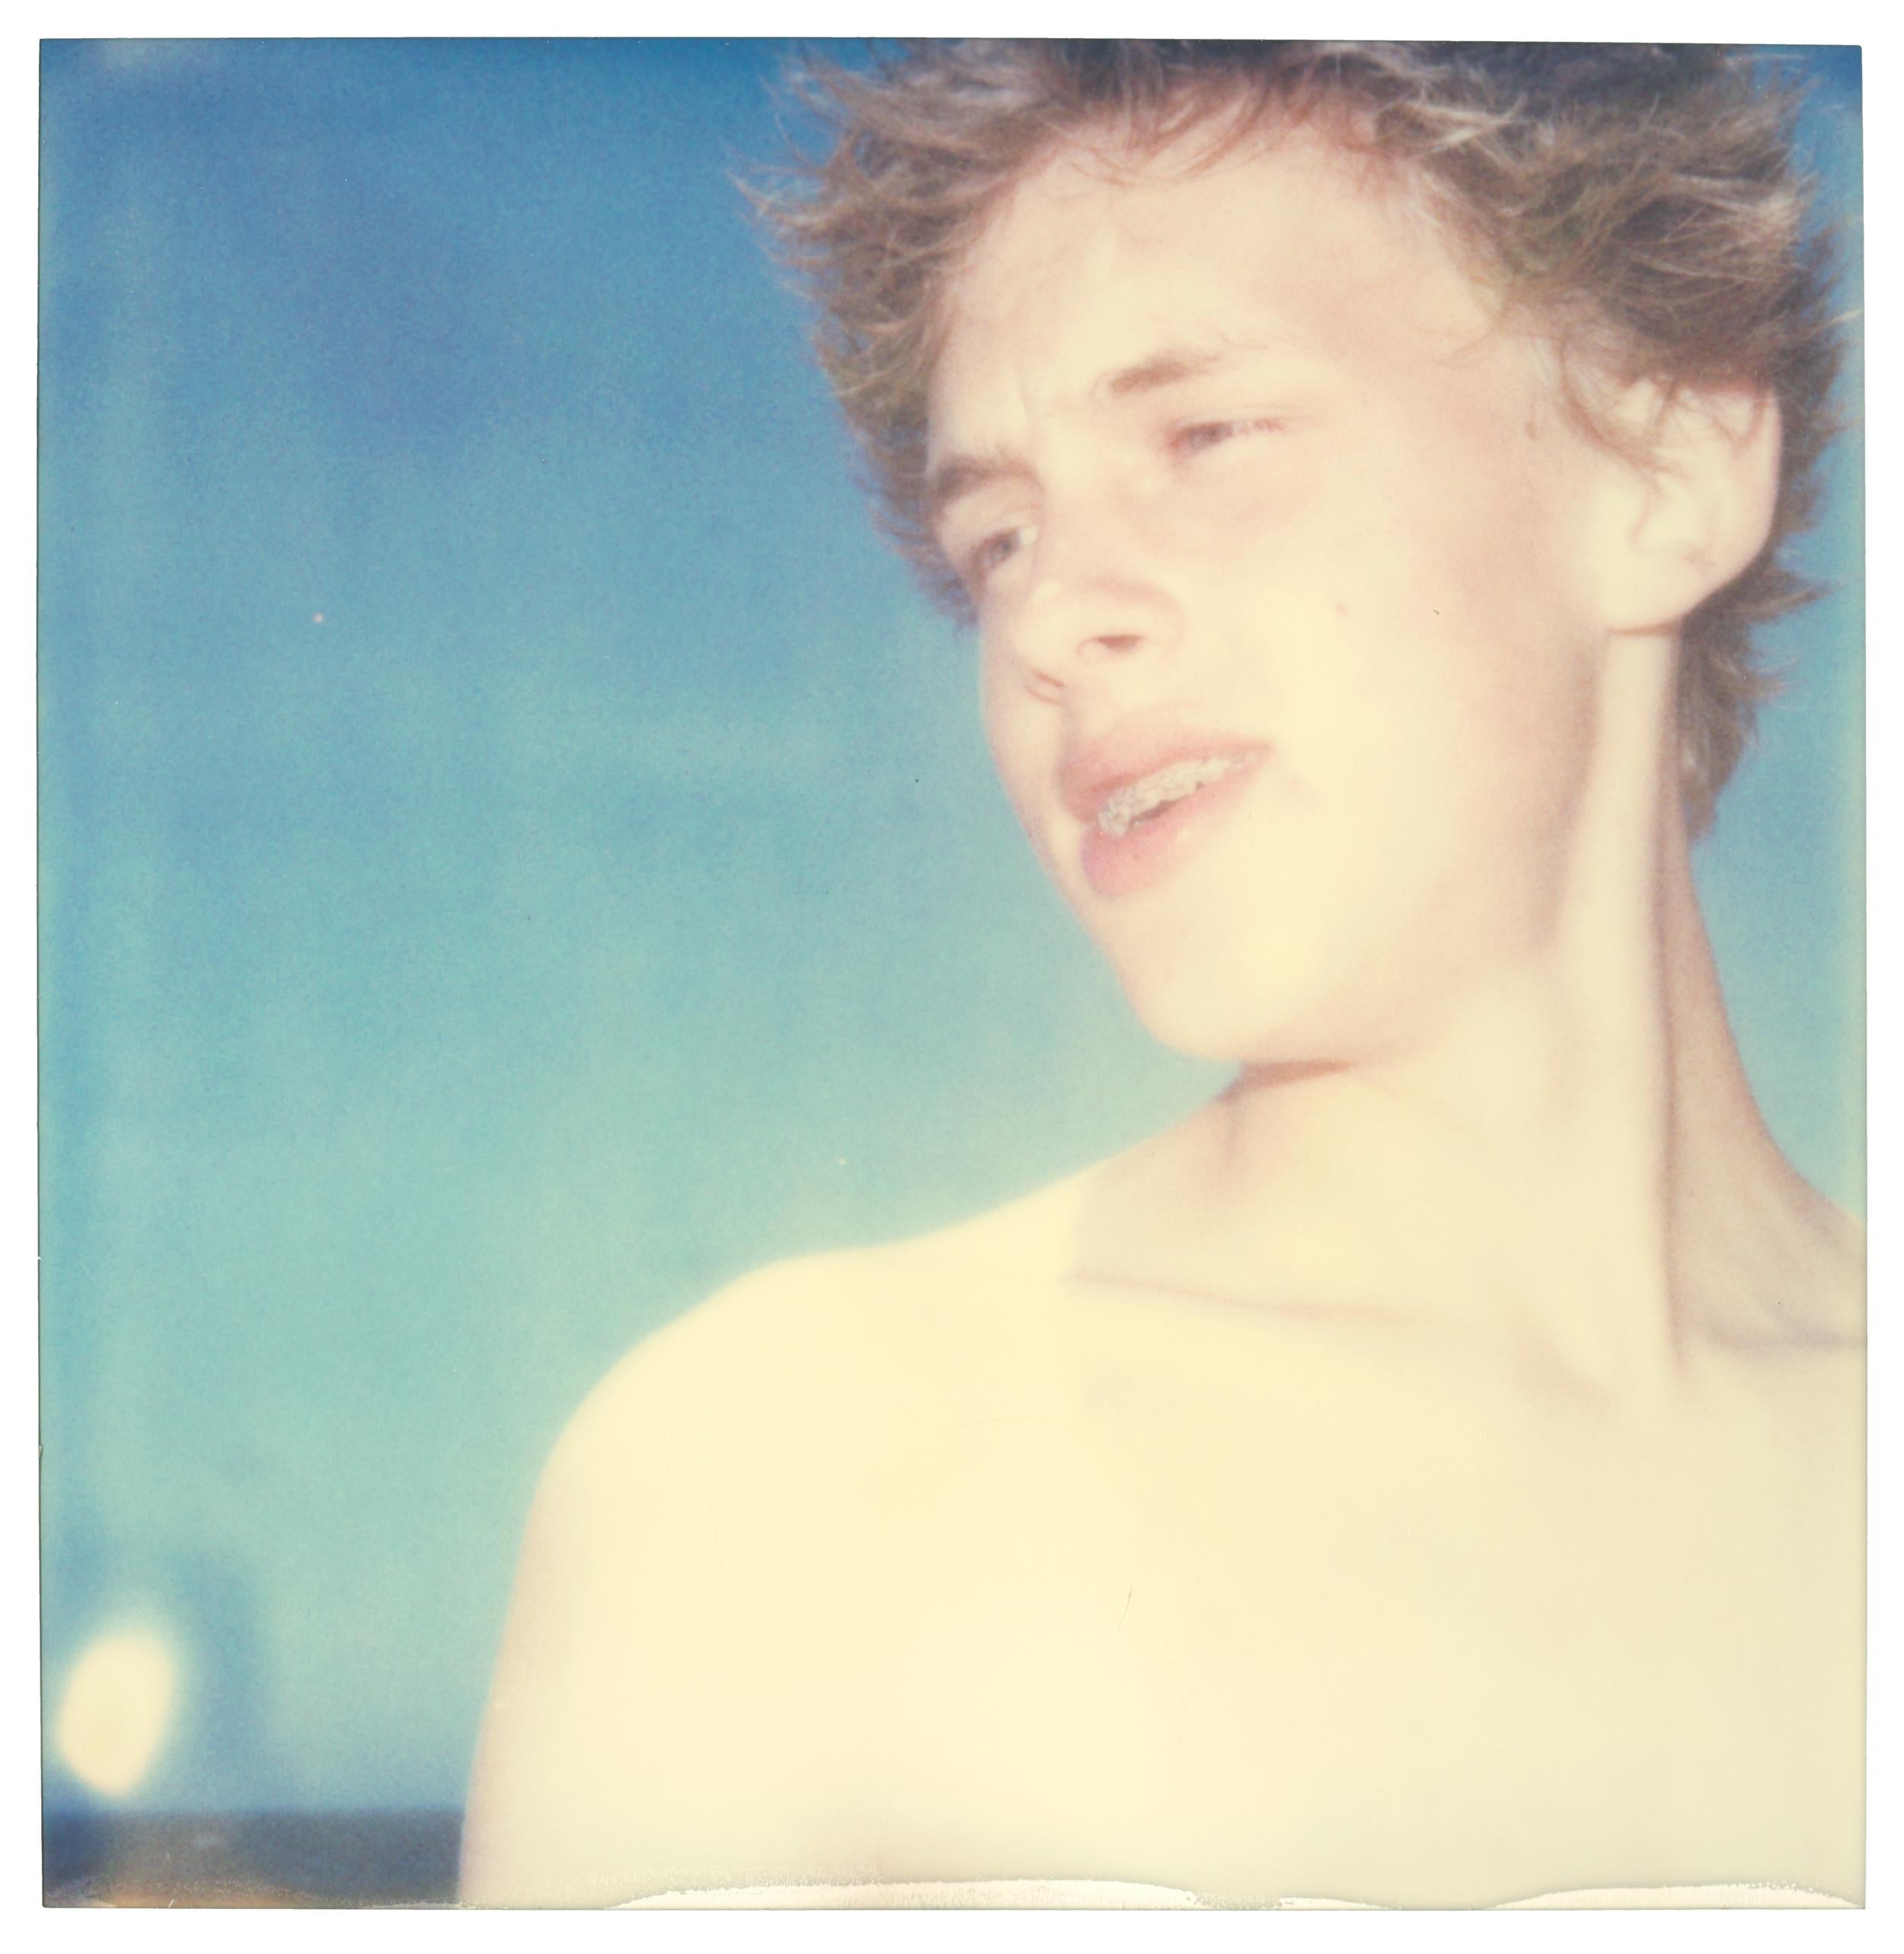 The Diva and the Boy (Beachshoot) - 9 pieces - Polaroid, Vintage, Contemporary 1